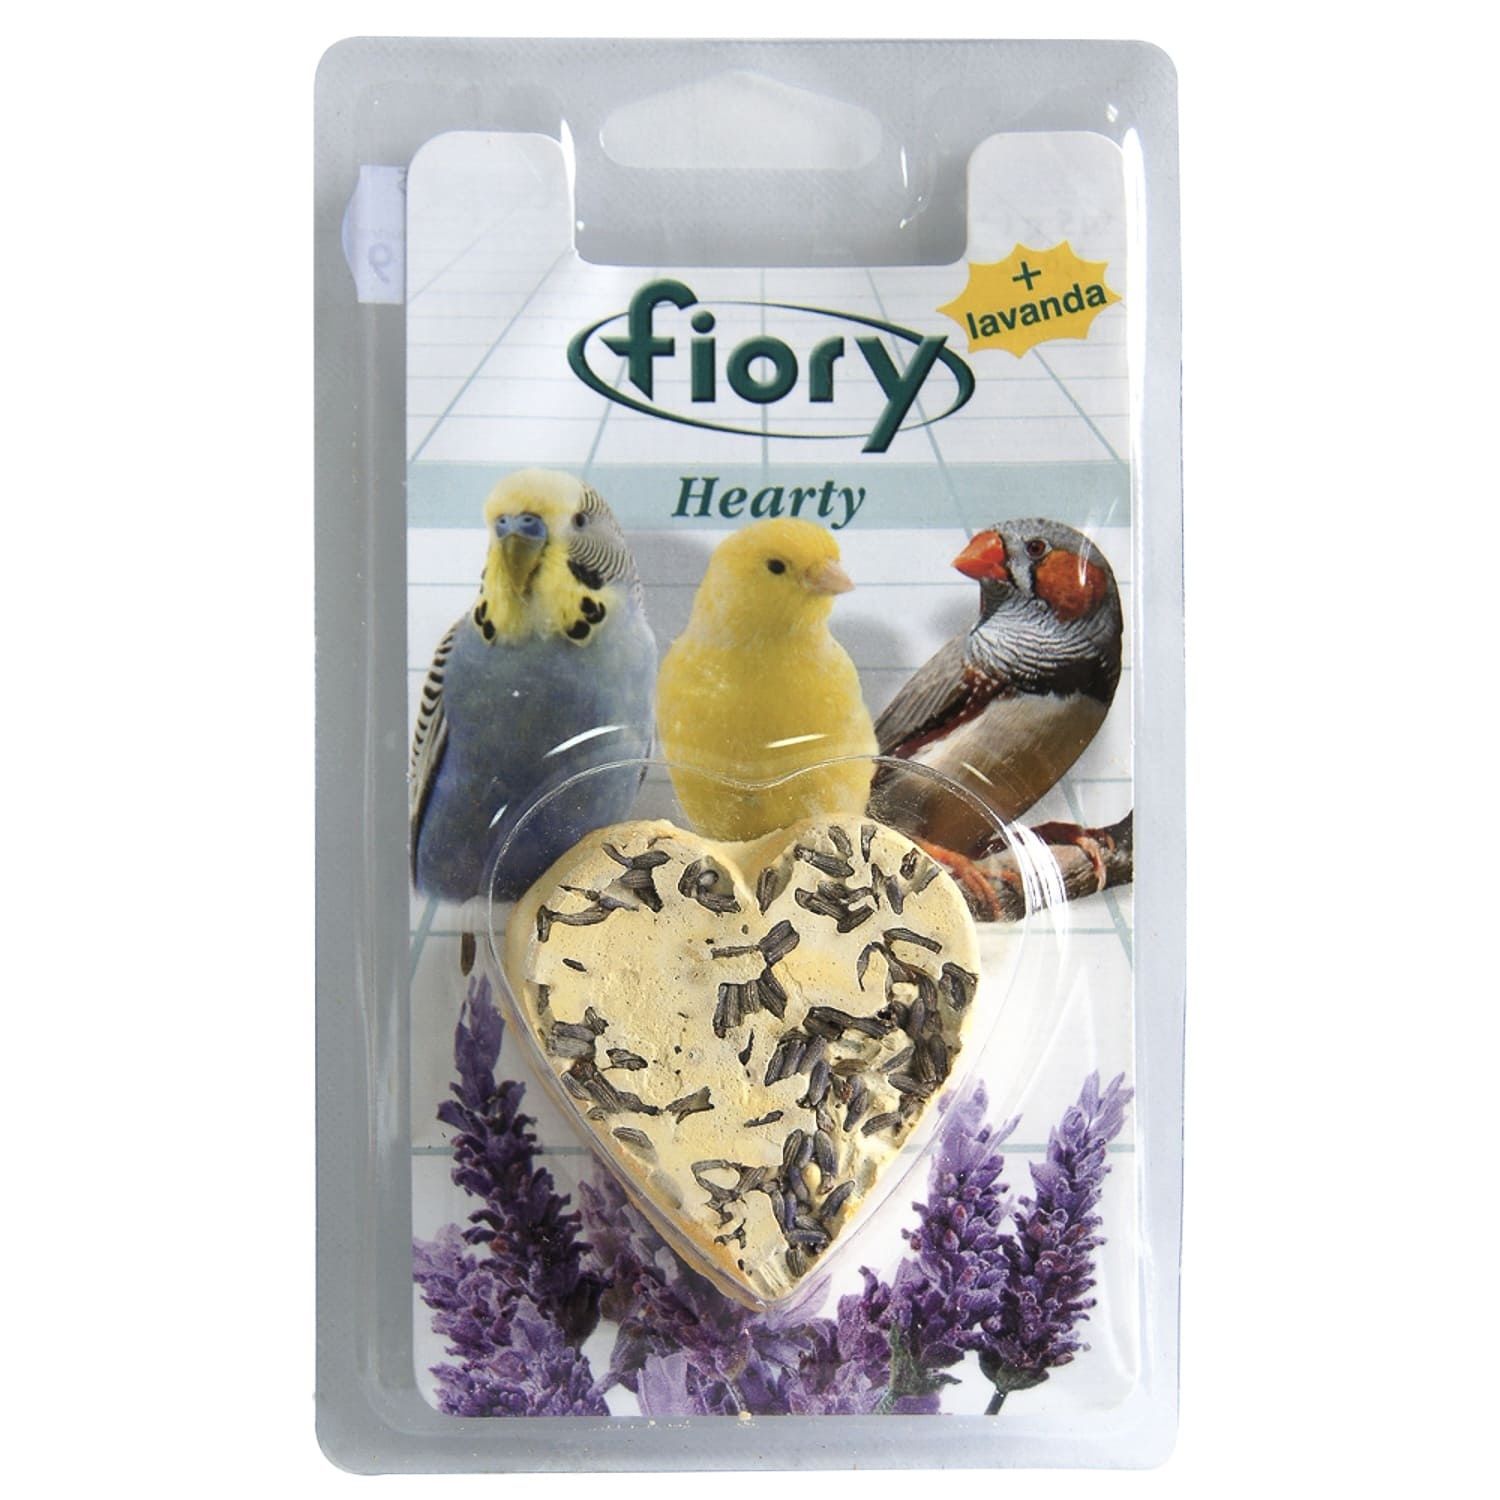 Fiory Fiory био-камень для птиц, с лавандой в форме сердца (45 г) vitakraft sepia schale камень для заточки клюва птиц 2 шт